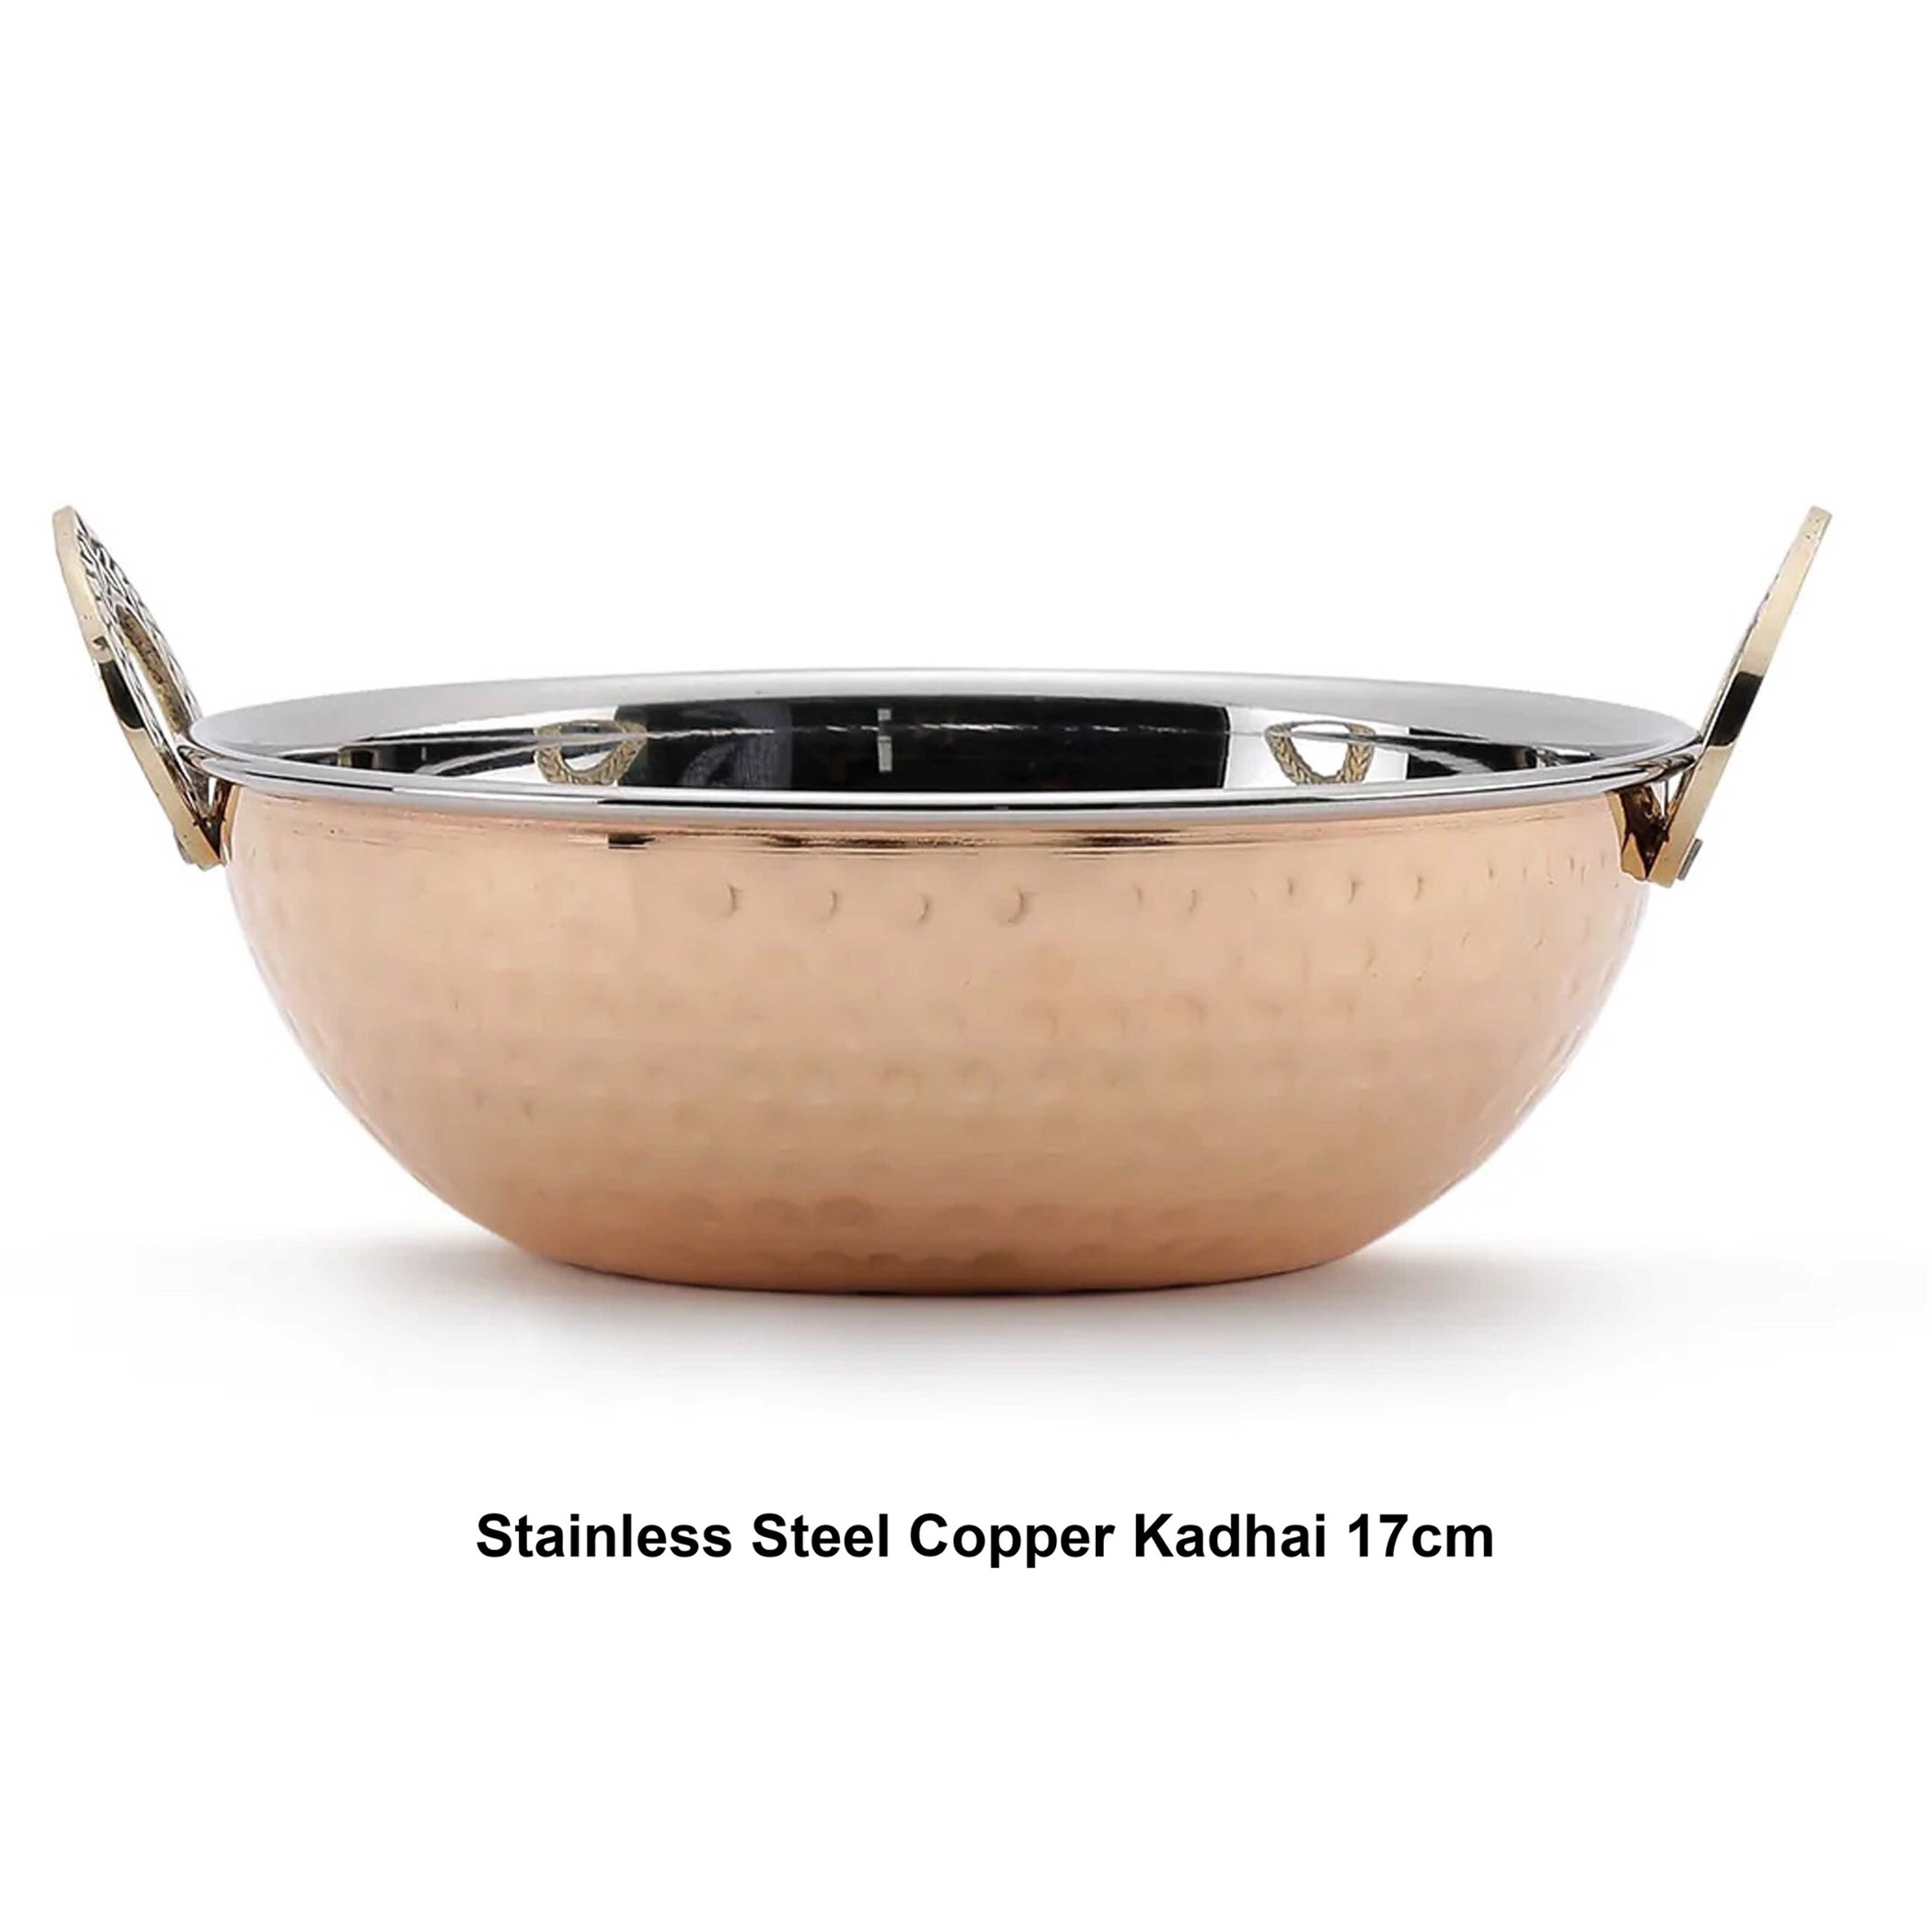 Stainless Steel Copper Kadai - 17 cm